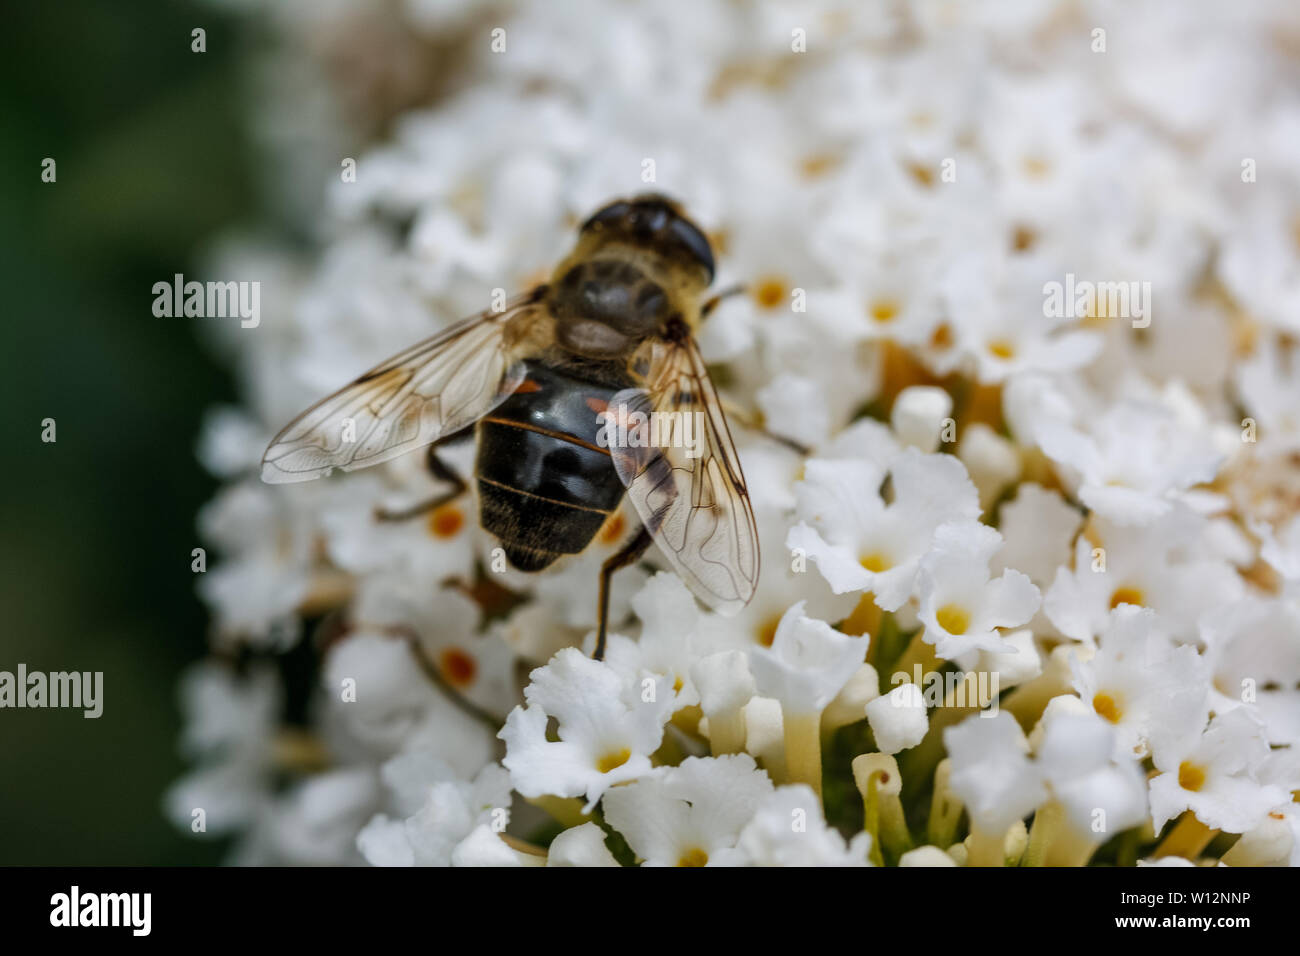 A bee walking across white flowers Stock Photo